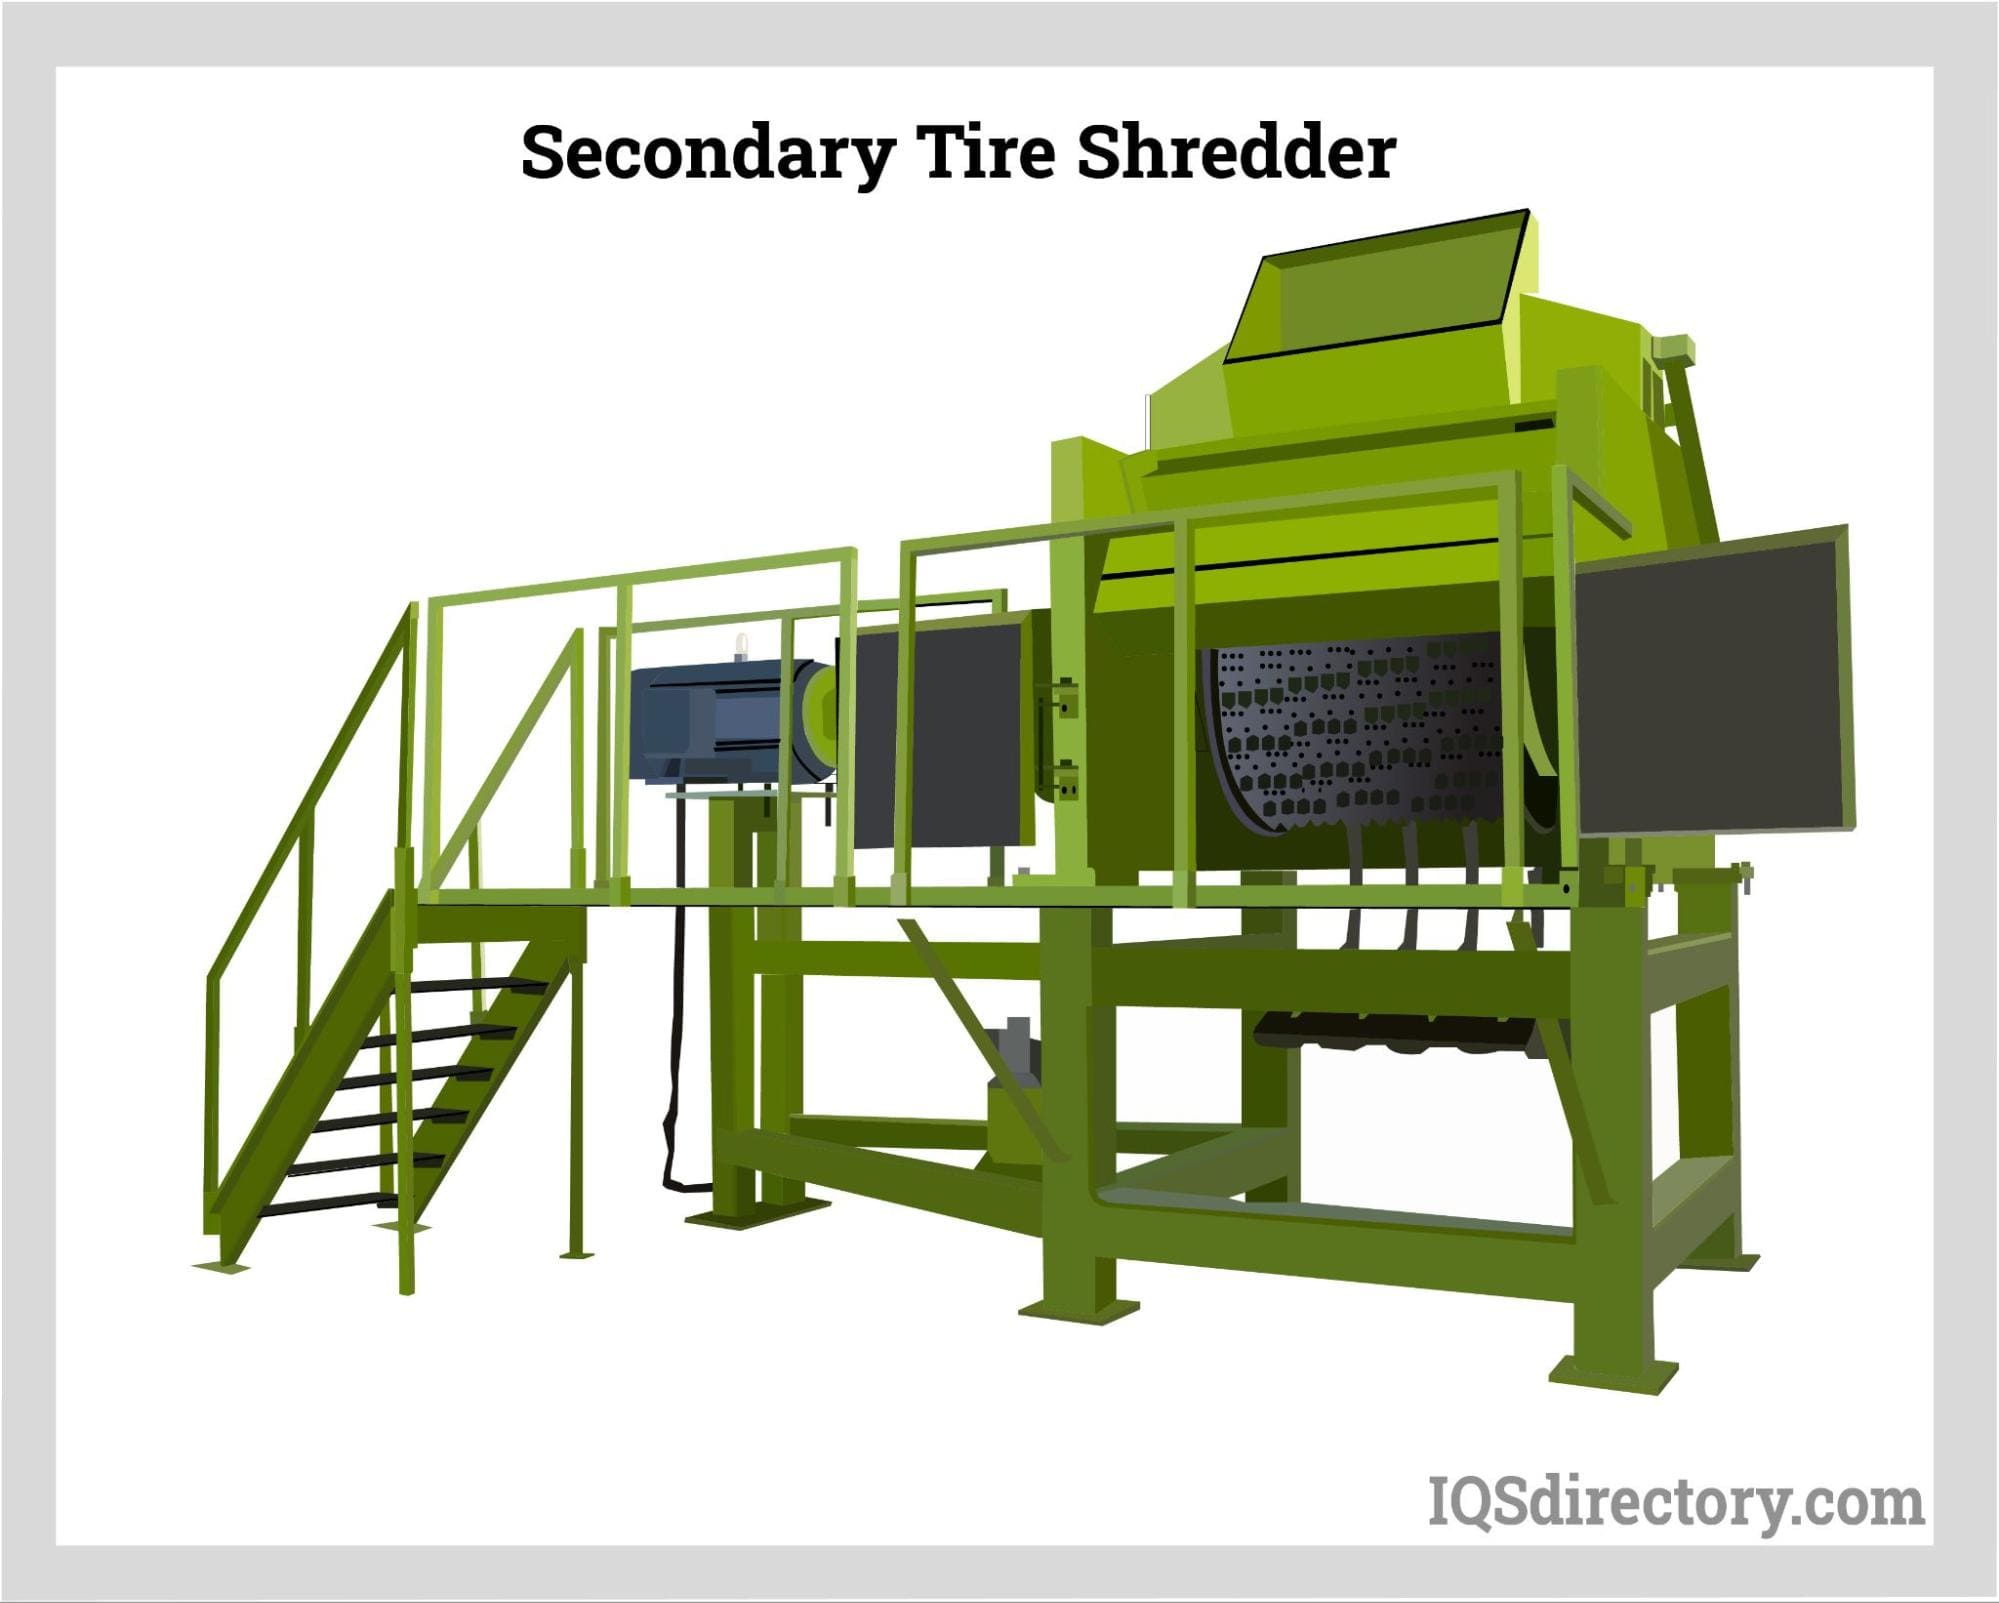 Secondary Tire Shredder